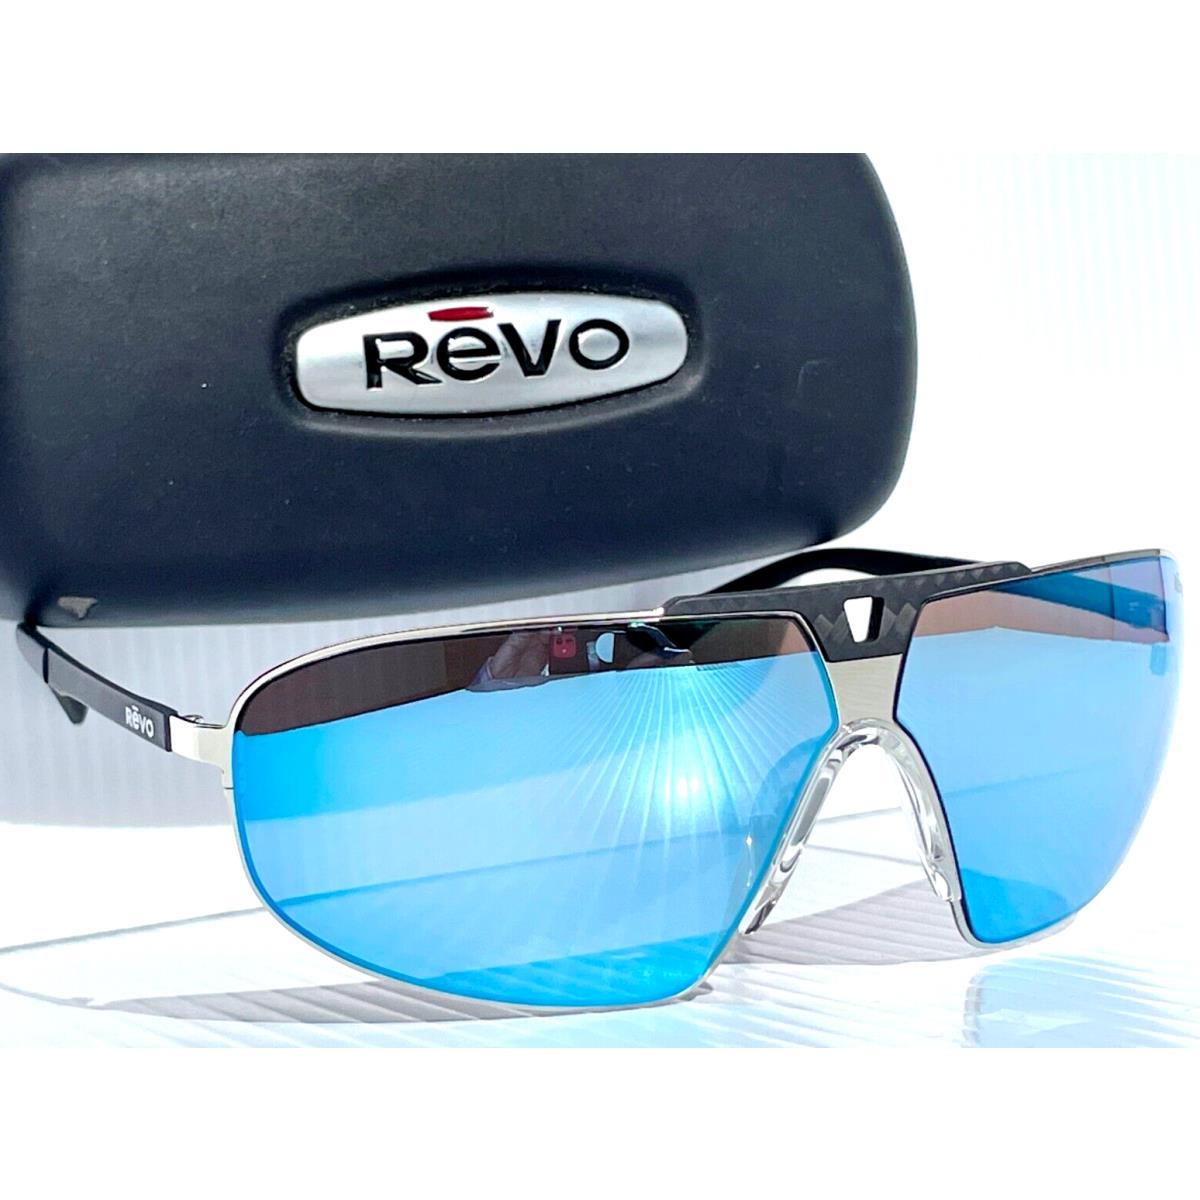 Revo Alpine Shiny Chrome Polarized Blue Mirror Lens Sunglass 1182 03 Blp